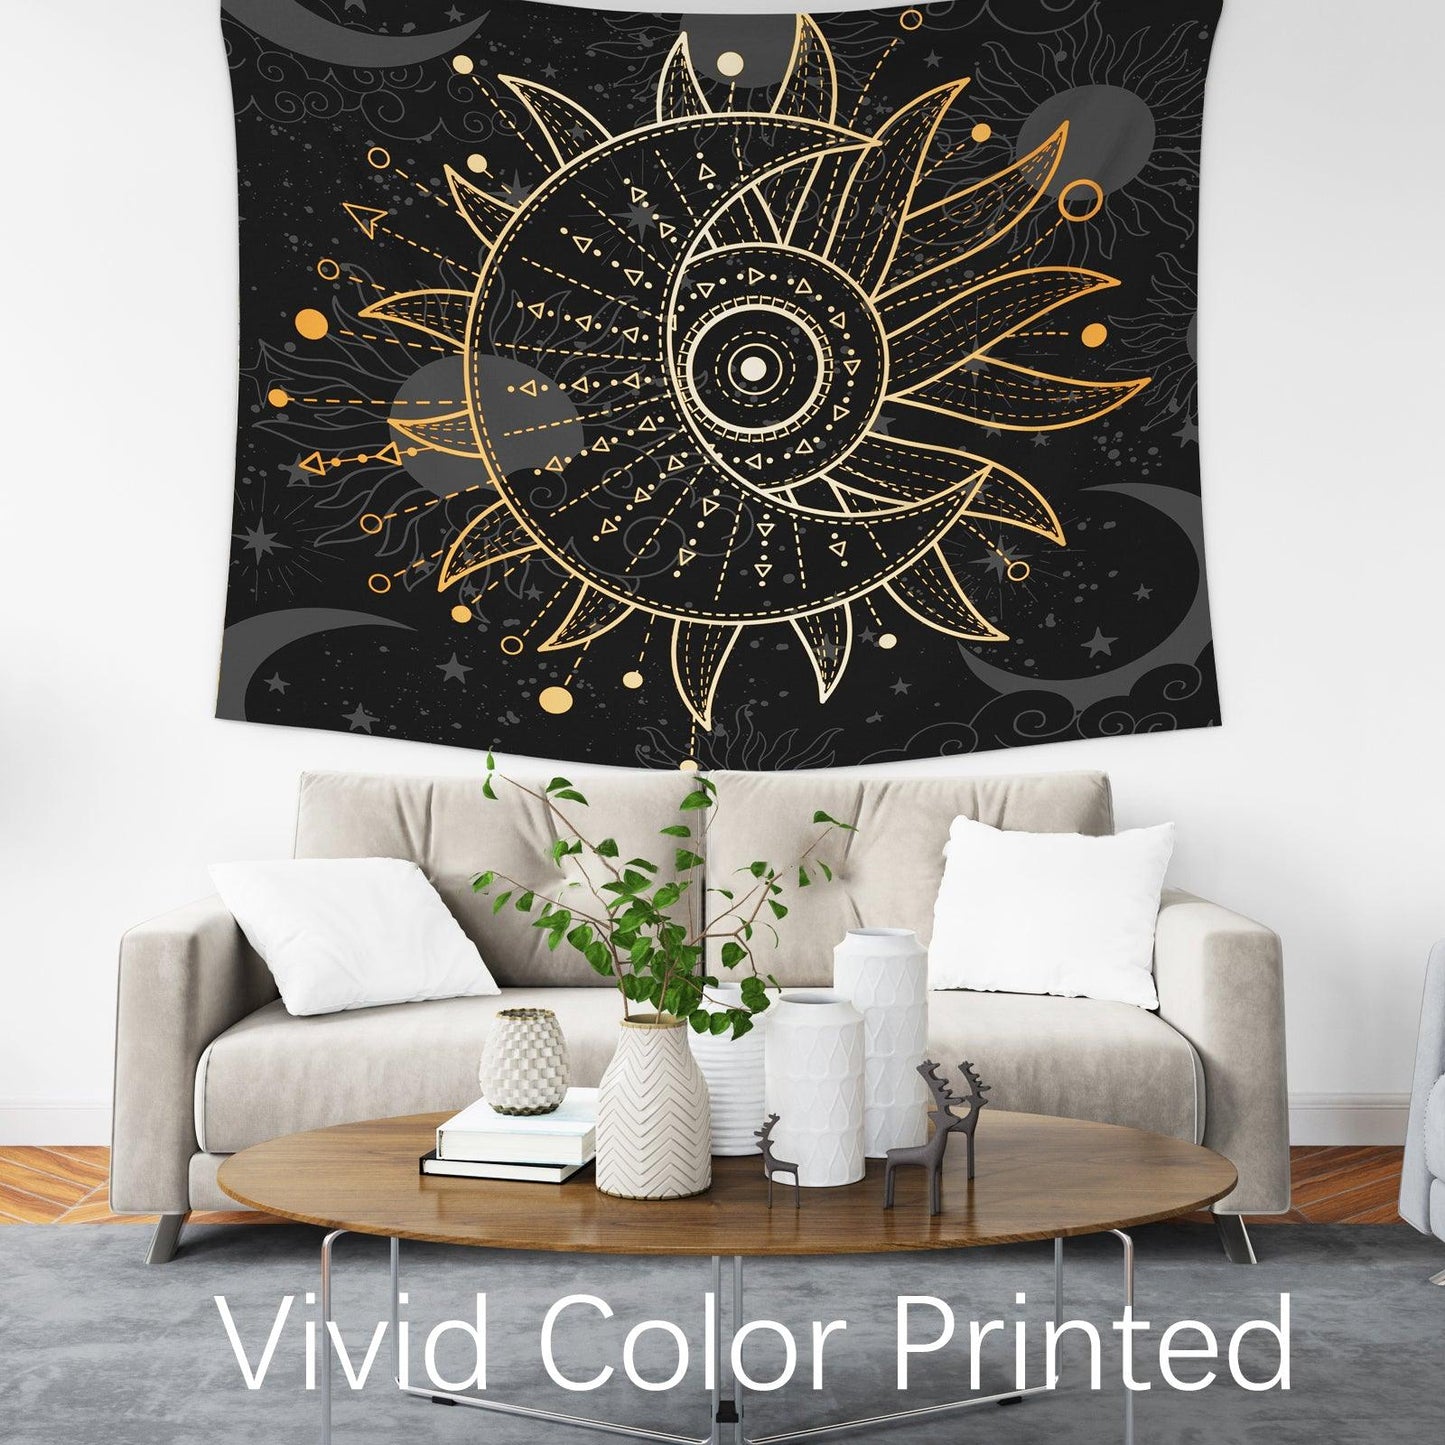 Occult Mystic Tapestry (Moon and Sun) - Berkin Arts